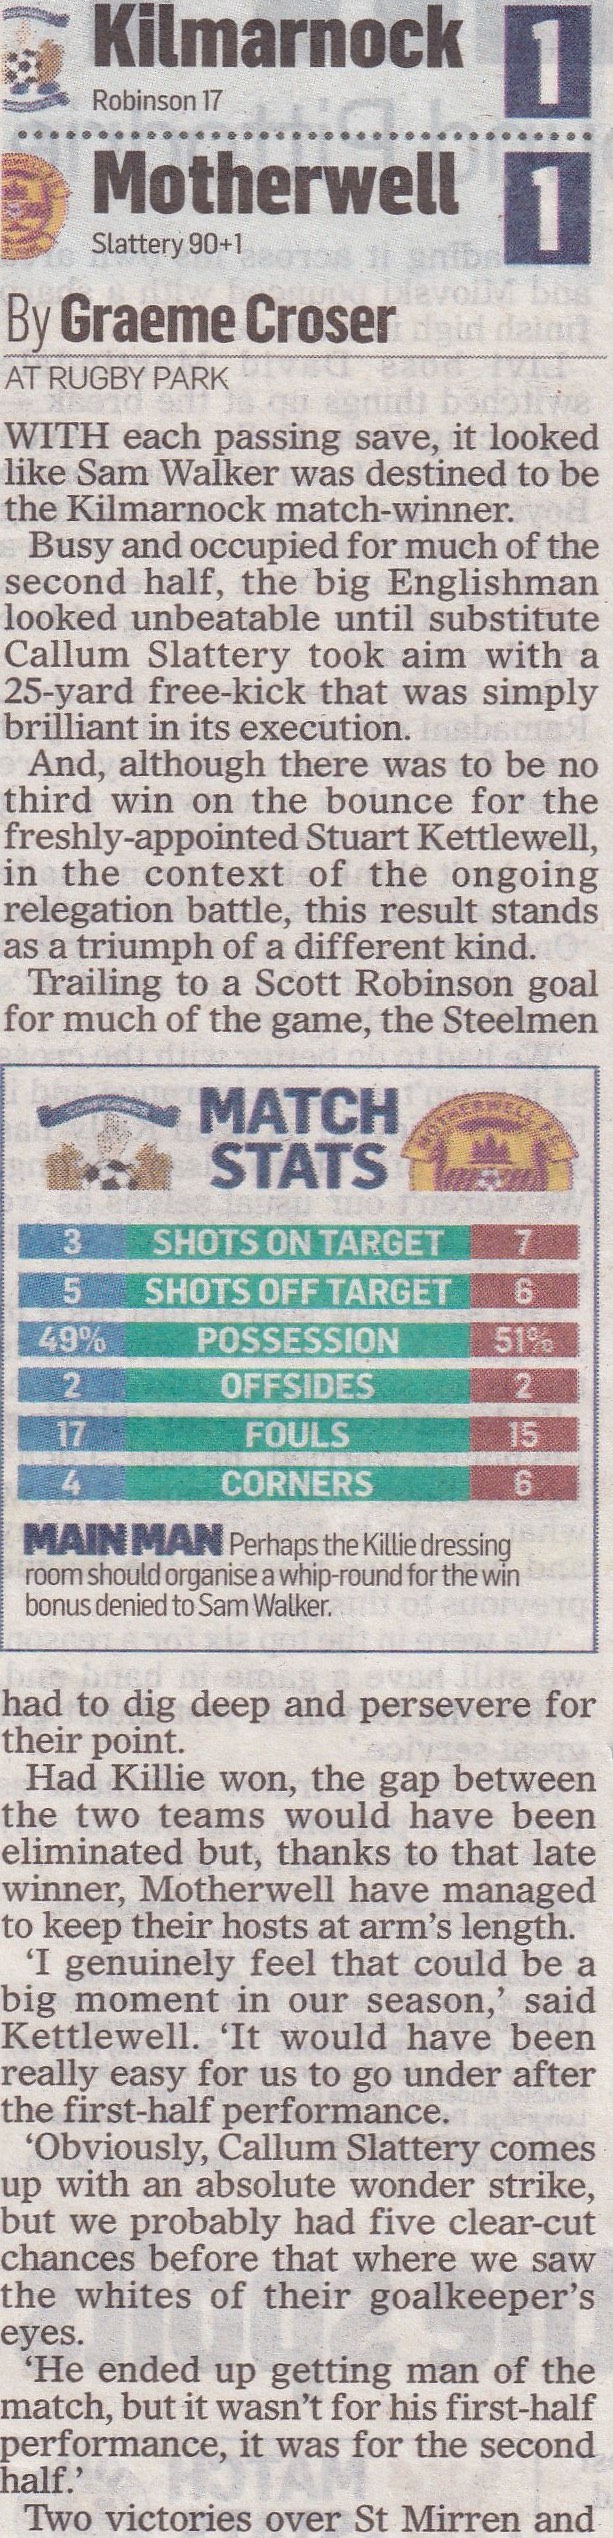 Motherwell versus Kilmarnock Tabloid Match Report